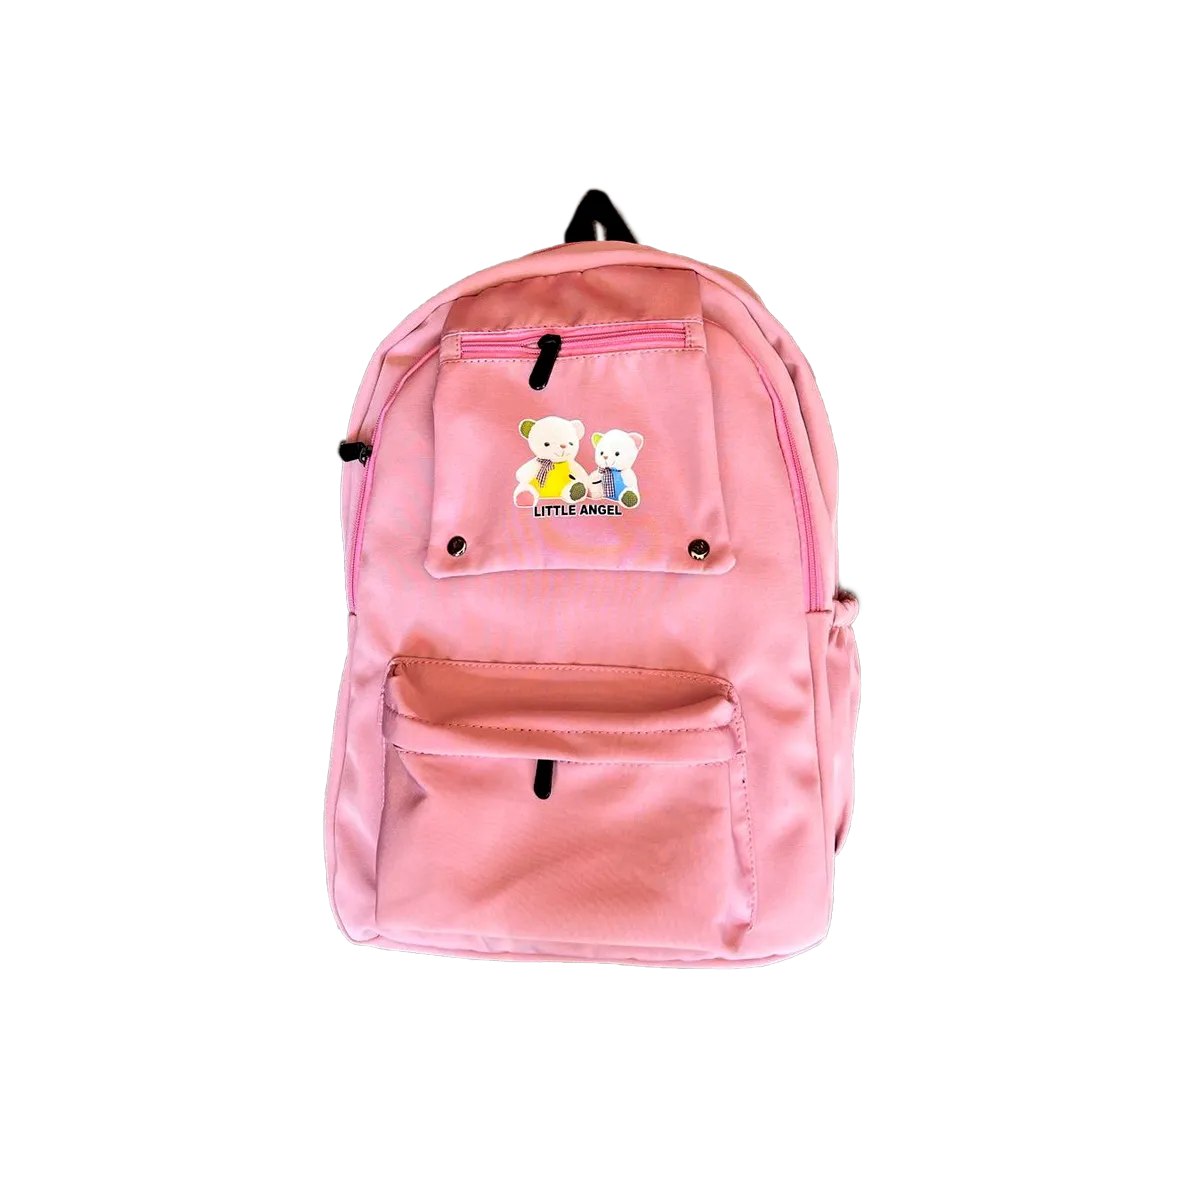 Little angel School Bag